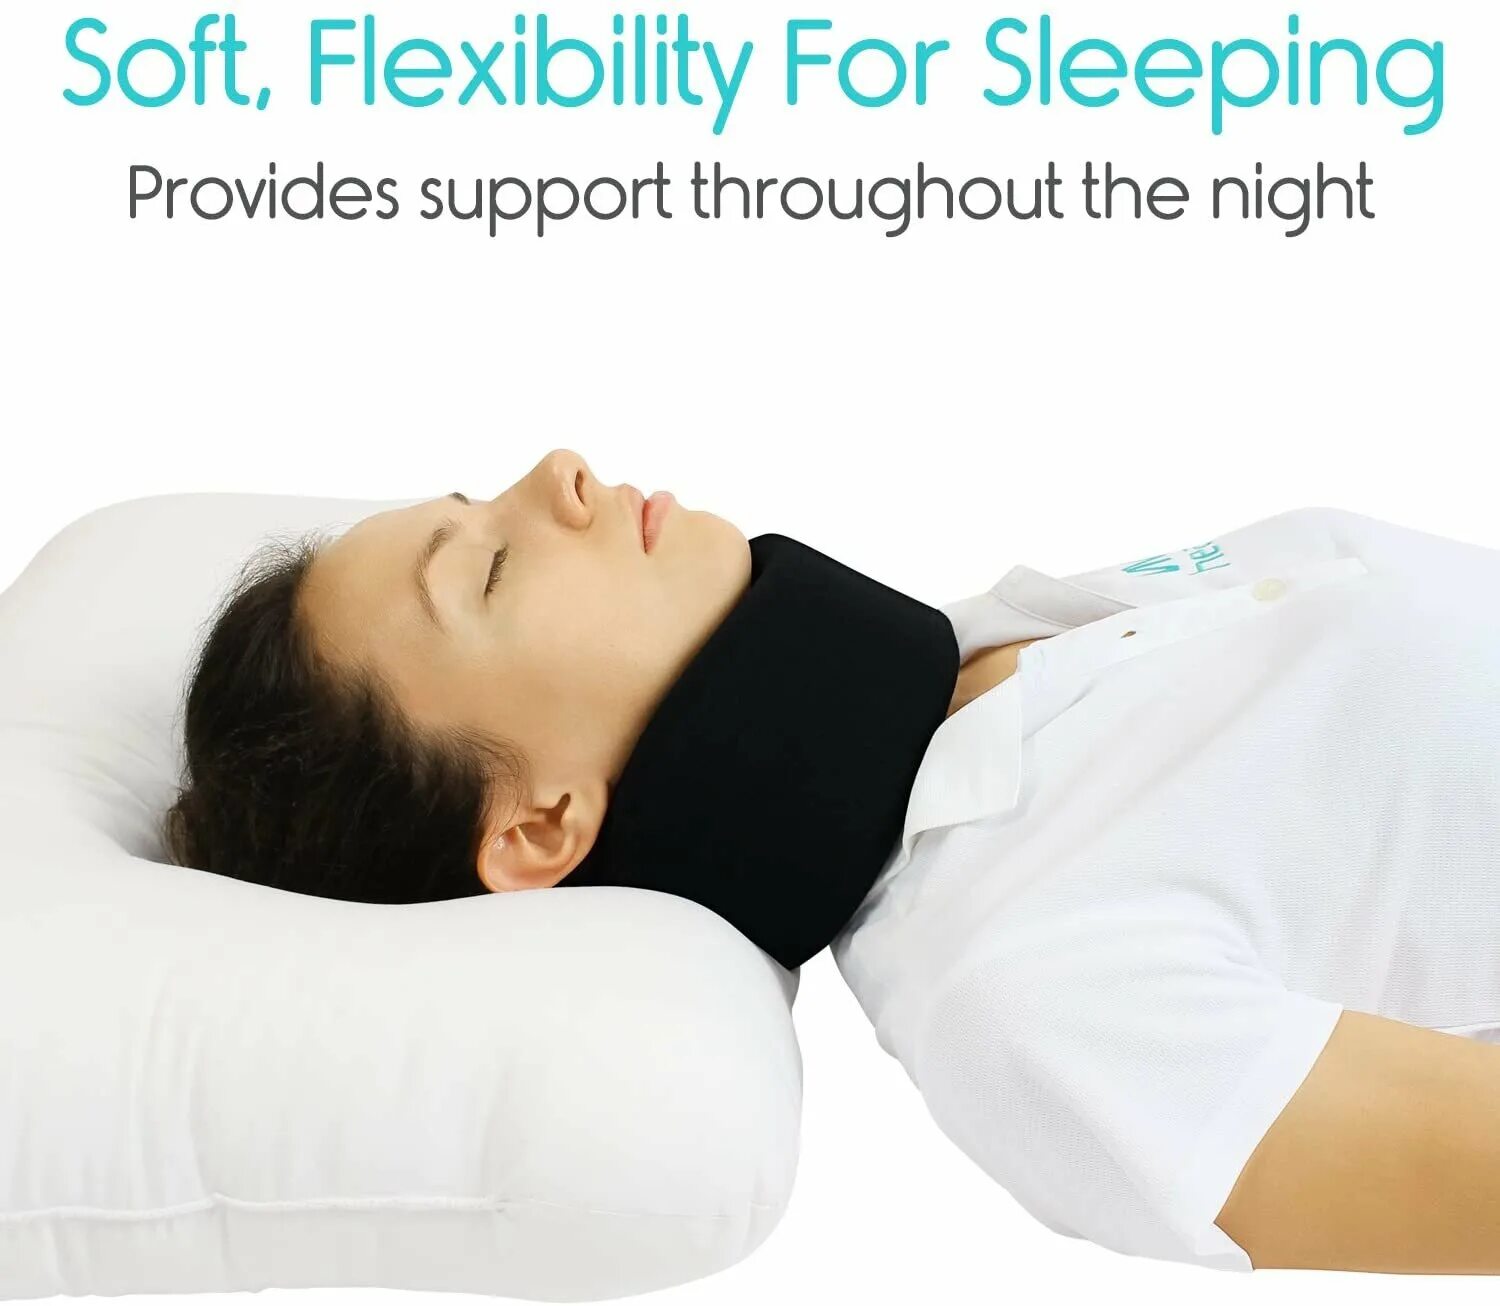 Подушка для шеи при остеохондрозе. Воротник на шею для сна. Спать при остеохондрозе. Фиксатор шеи для сна. Остеохондроз спать без подушки